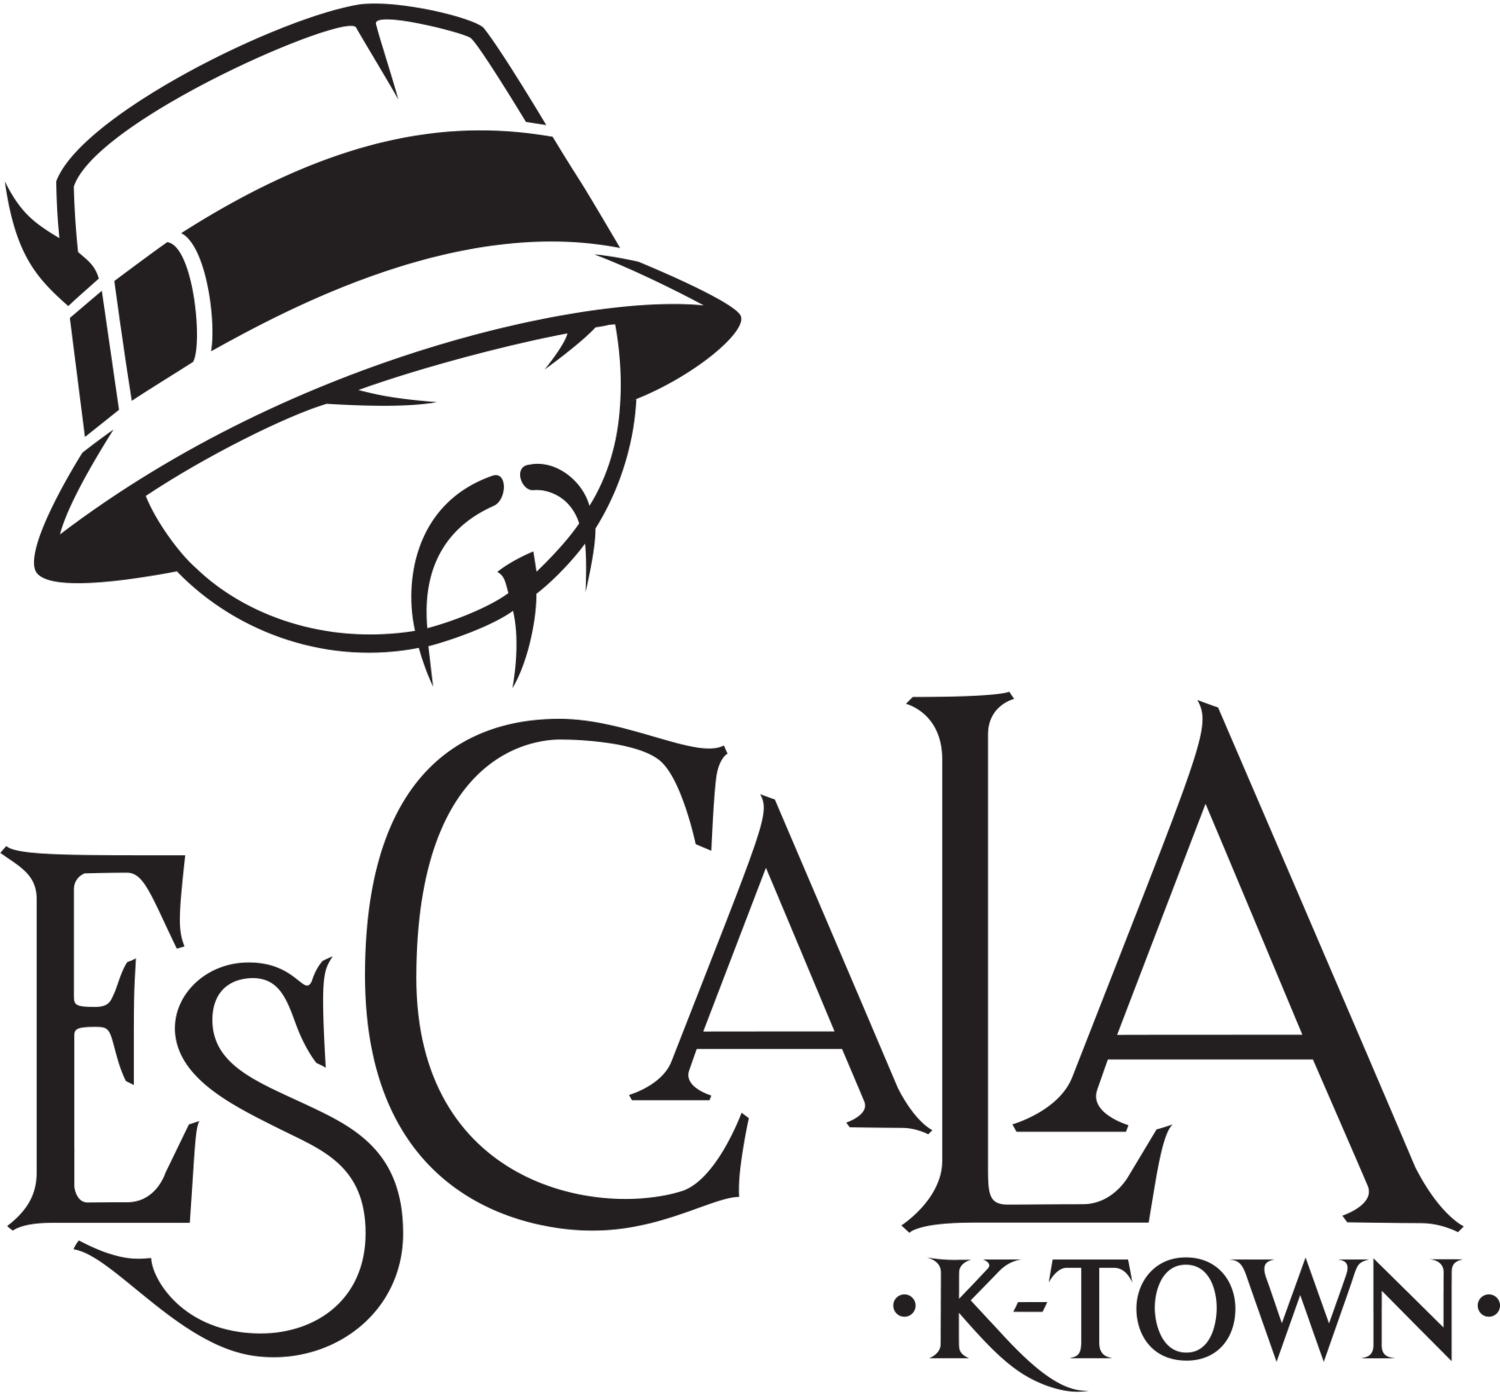 Escala K-town Restaurant & Bar